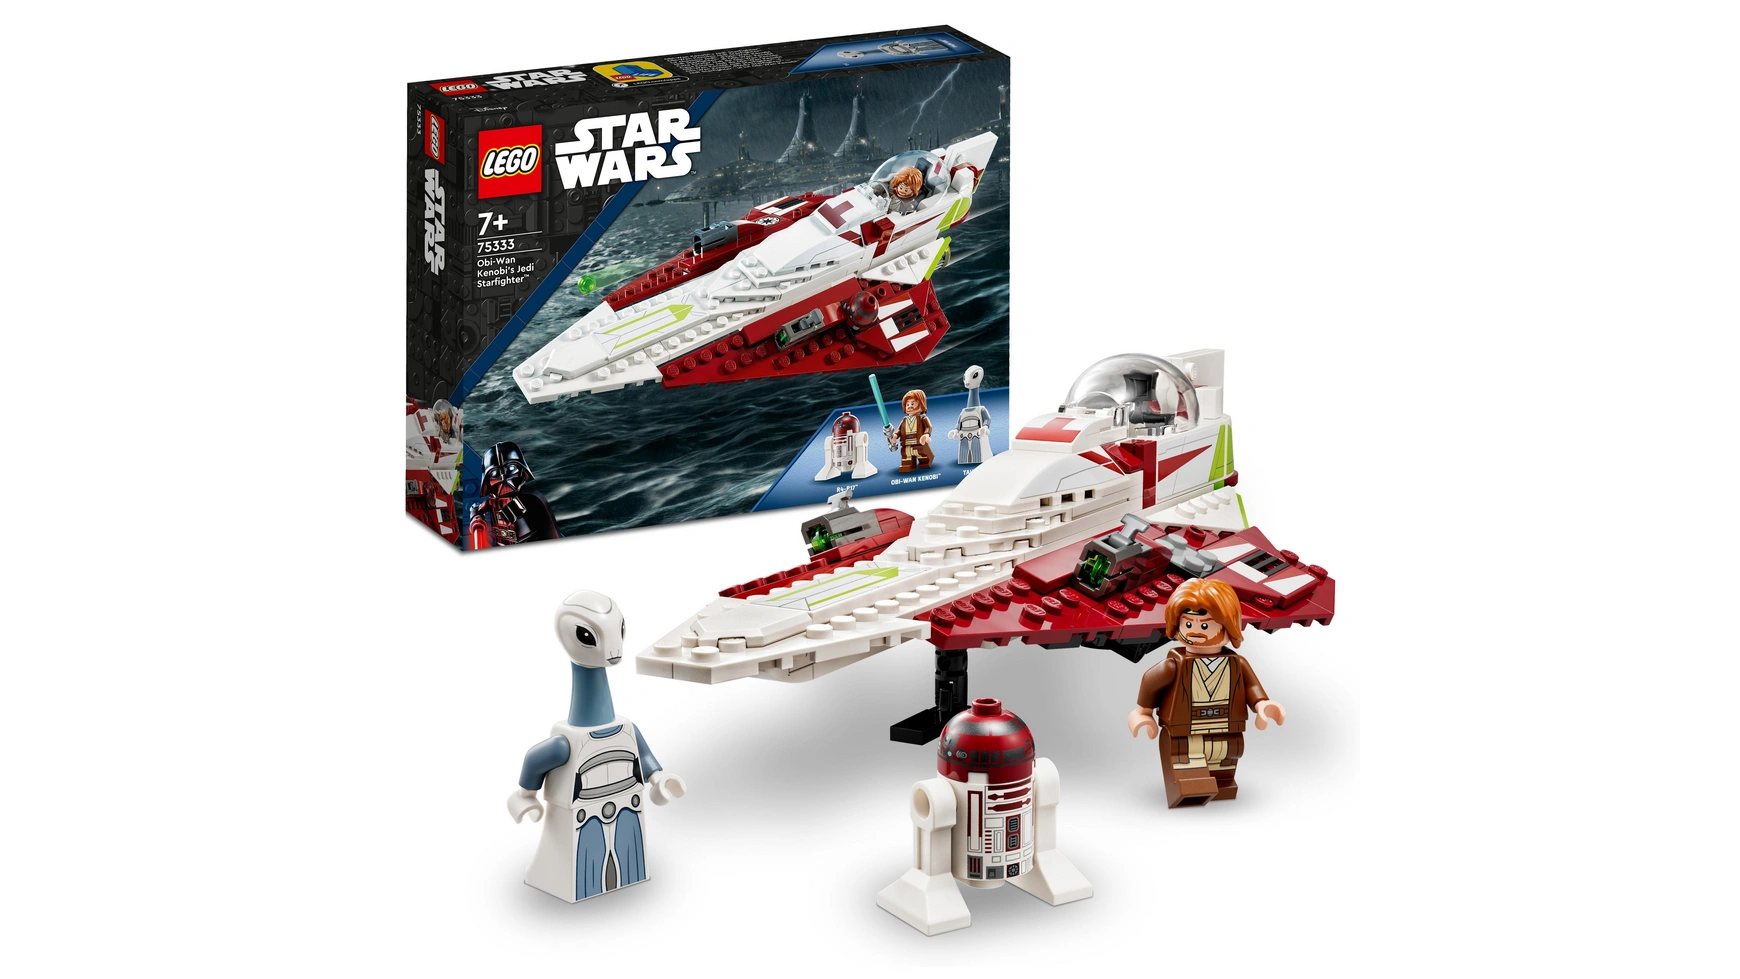 конструктор lego star wars 75333 джедайский истребитель оби вана кеноби Lego Star Wars Набор Звездный истребитель джедая Оби-Вана Кеноби